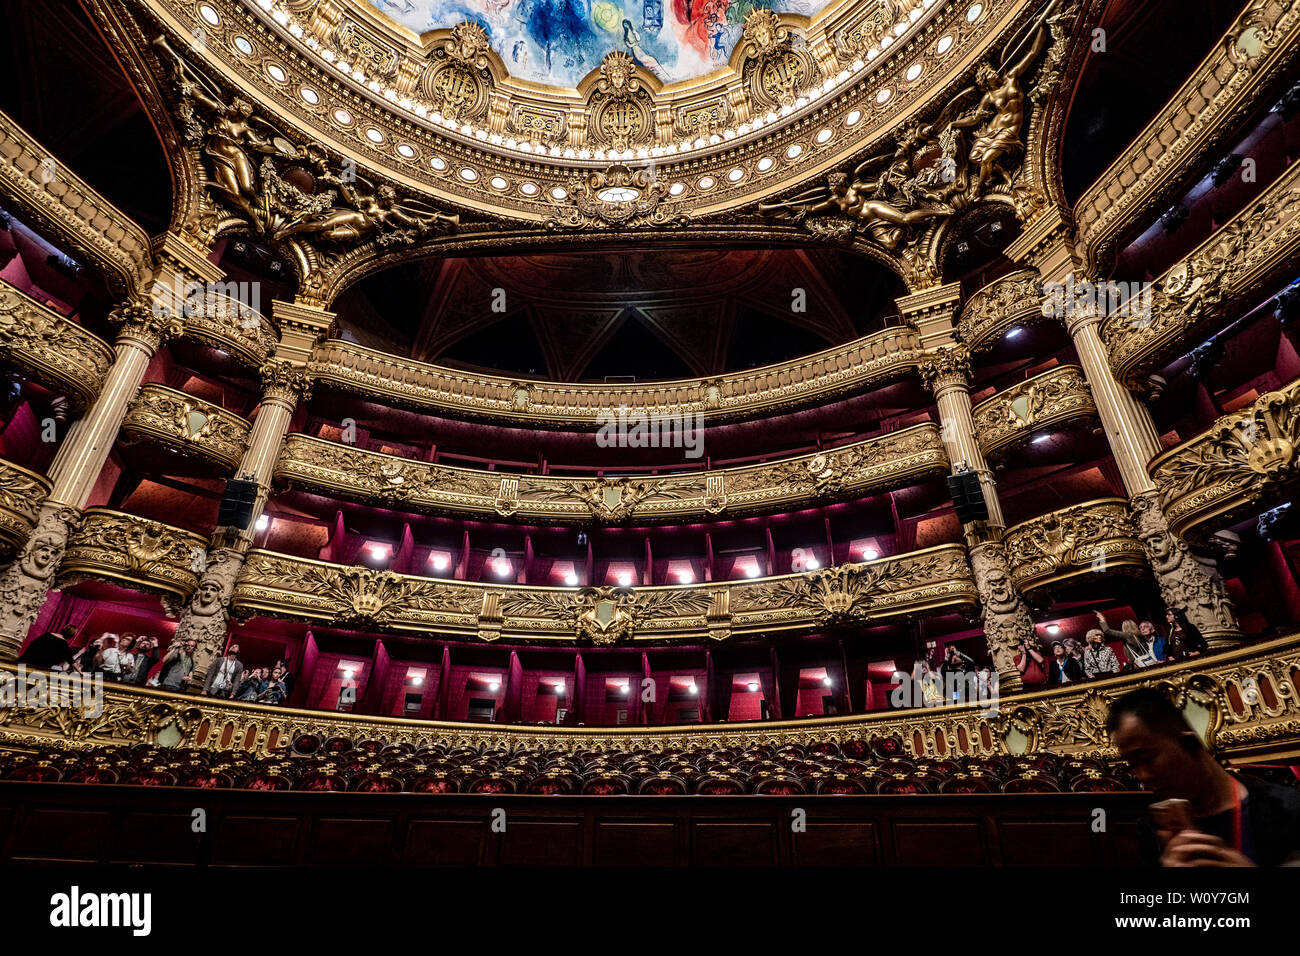 Palais Garnier - Paris Opera House - Tour groups Contemplate the suditorium interior architecture and decoration. Paris, France - May 14, 2019. Stock Photo